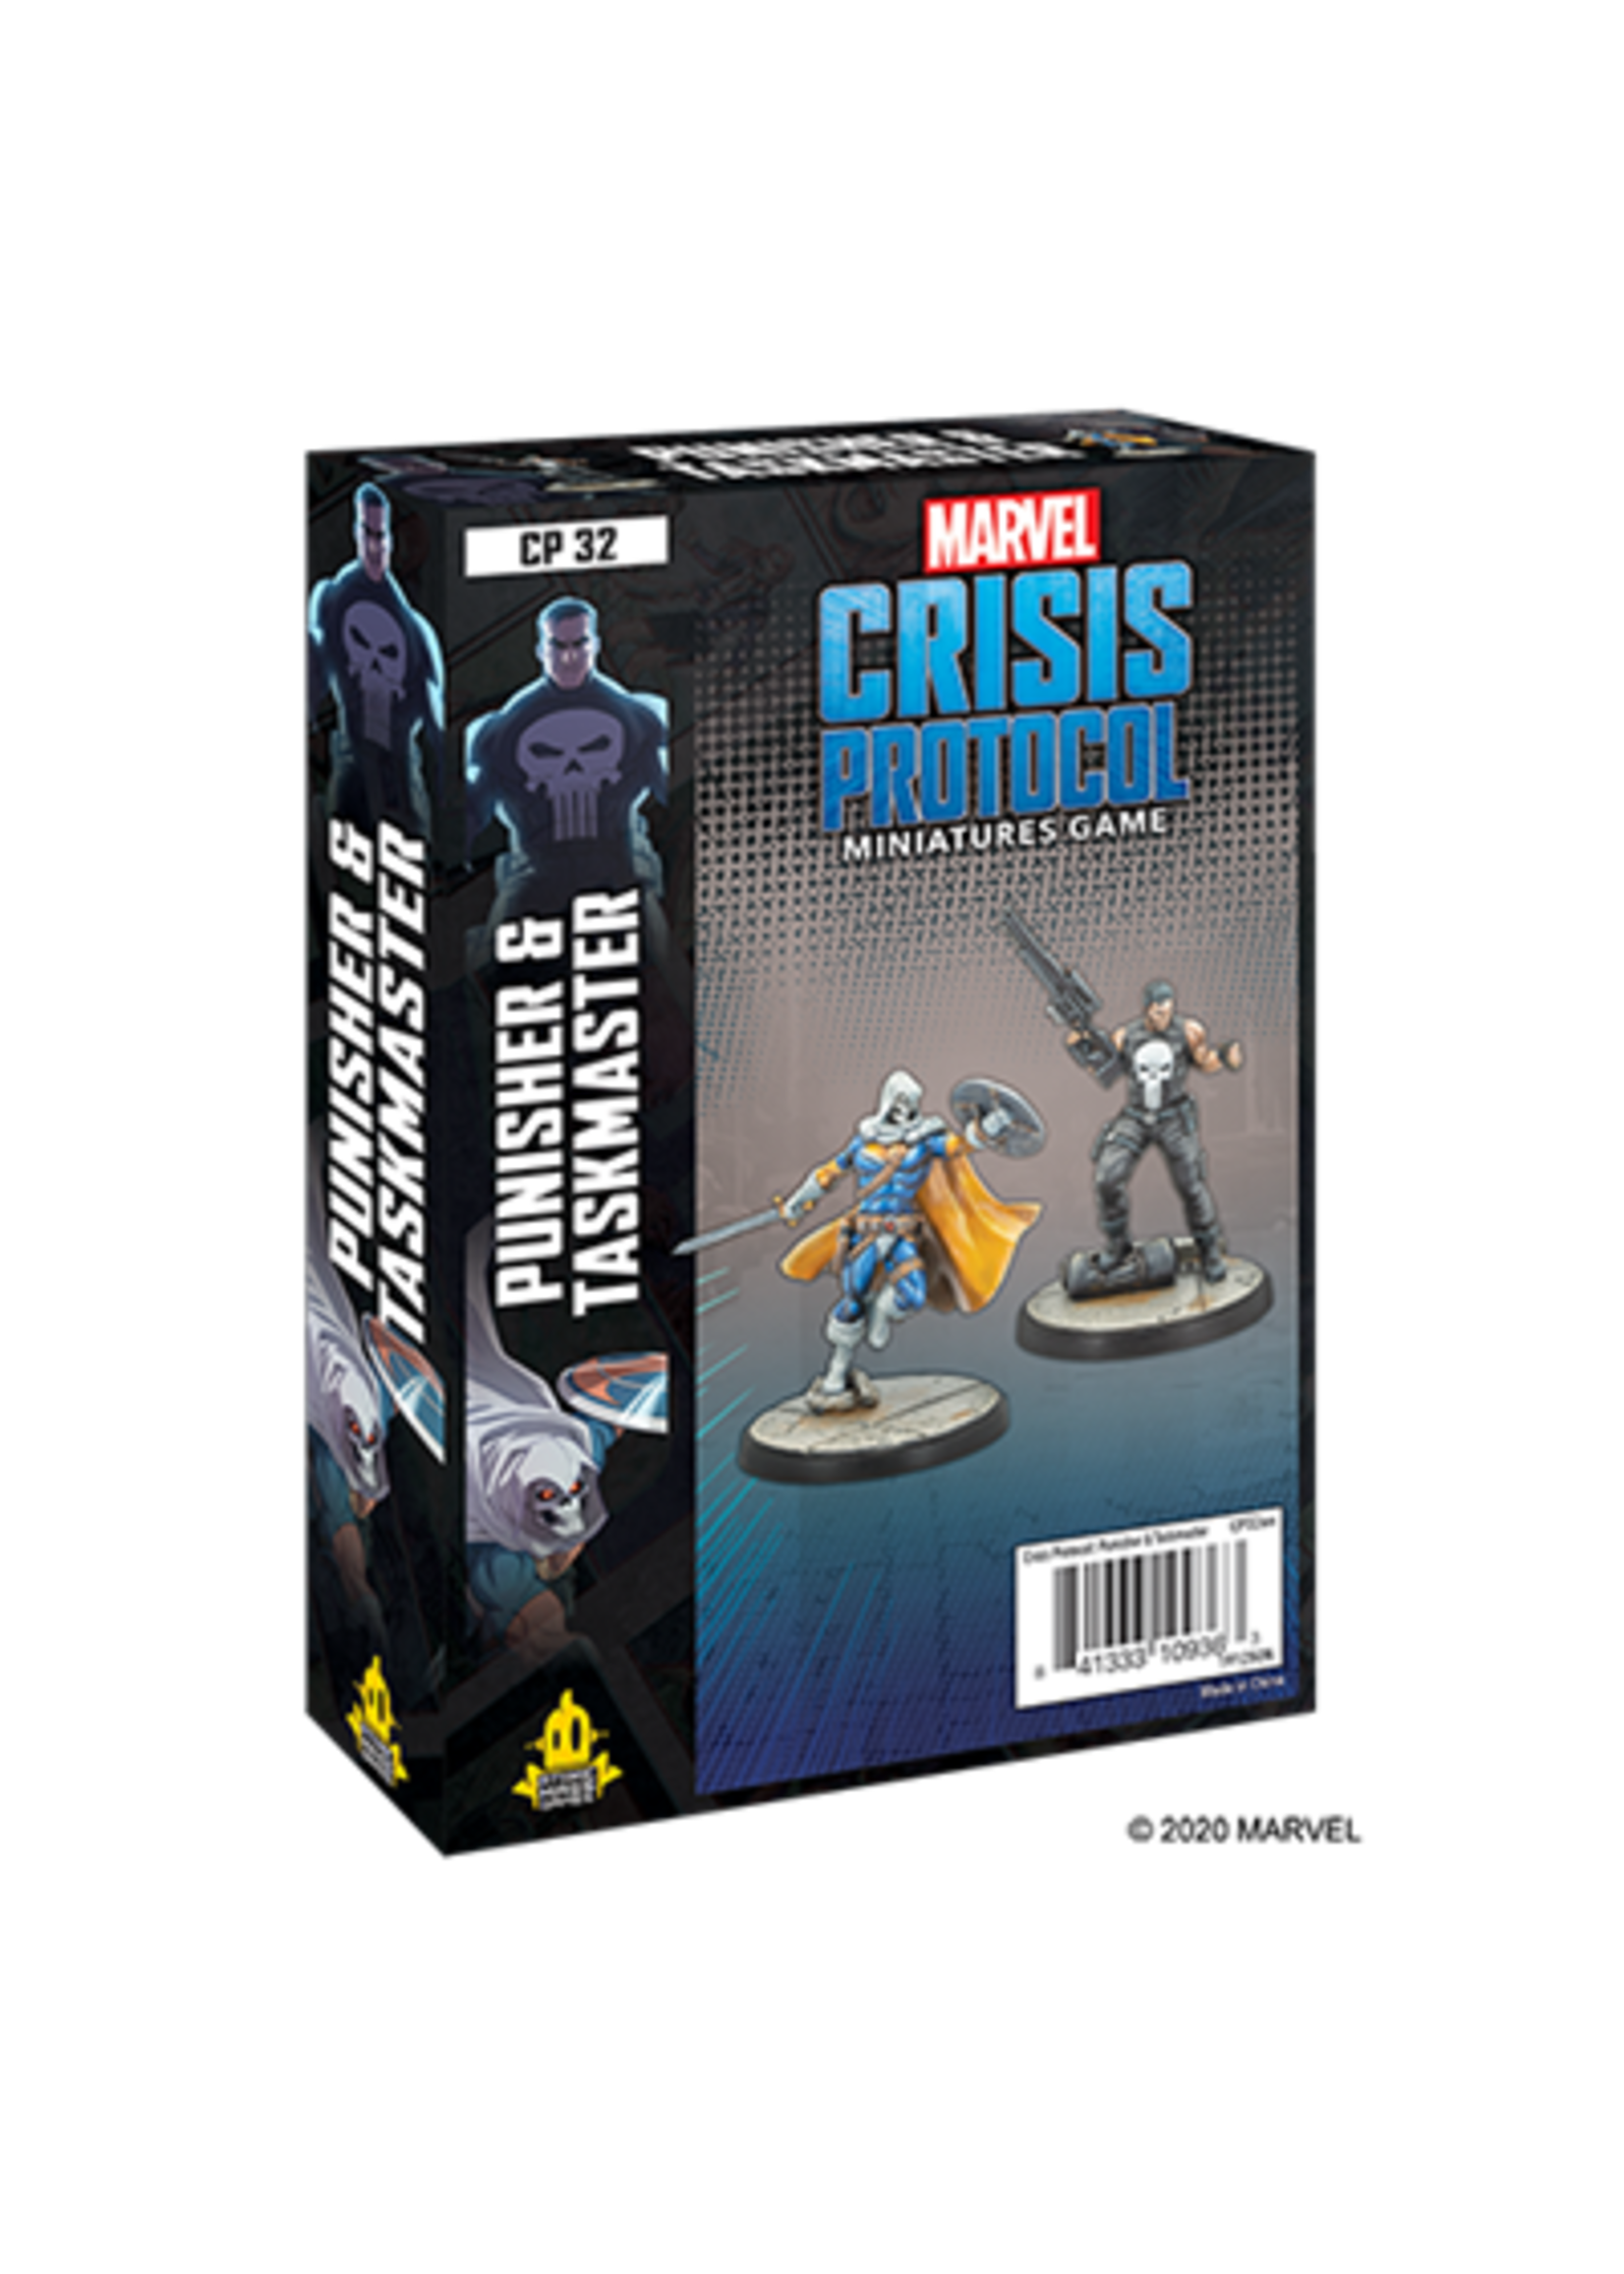 Marvel: Crisis Protocol - Punisher and Taskmaster